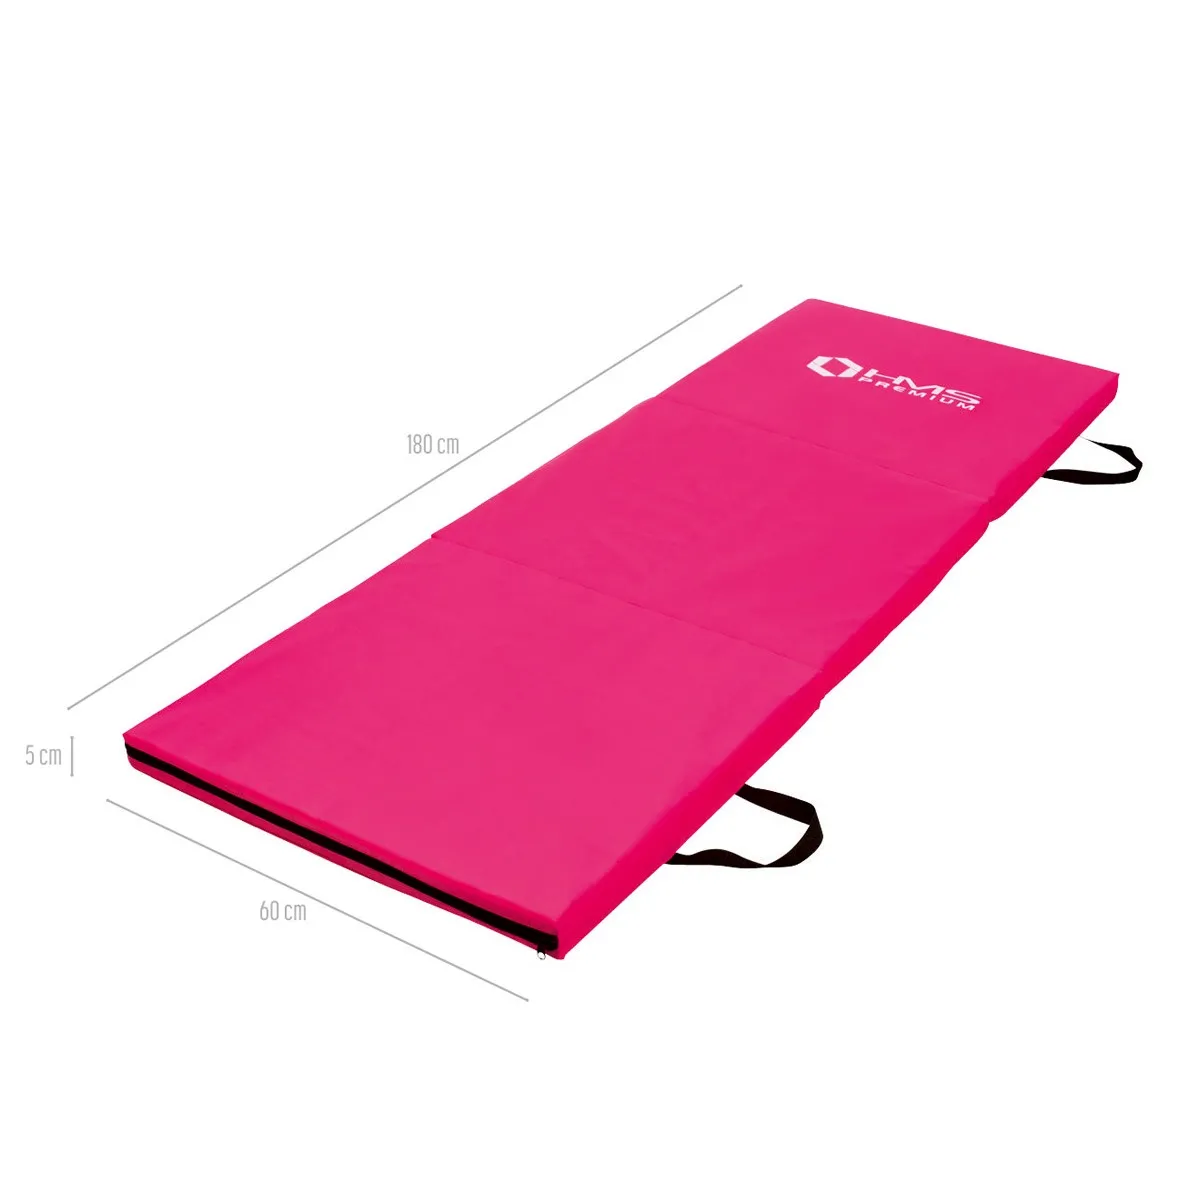 Gymnastikmatte faltbar pink 1800x600 mm